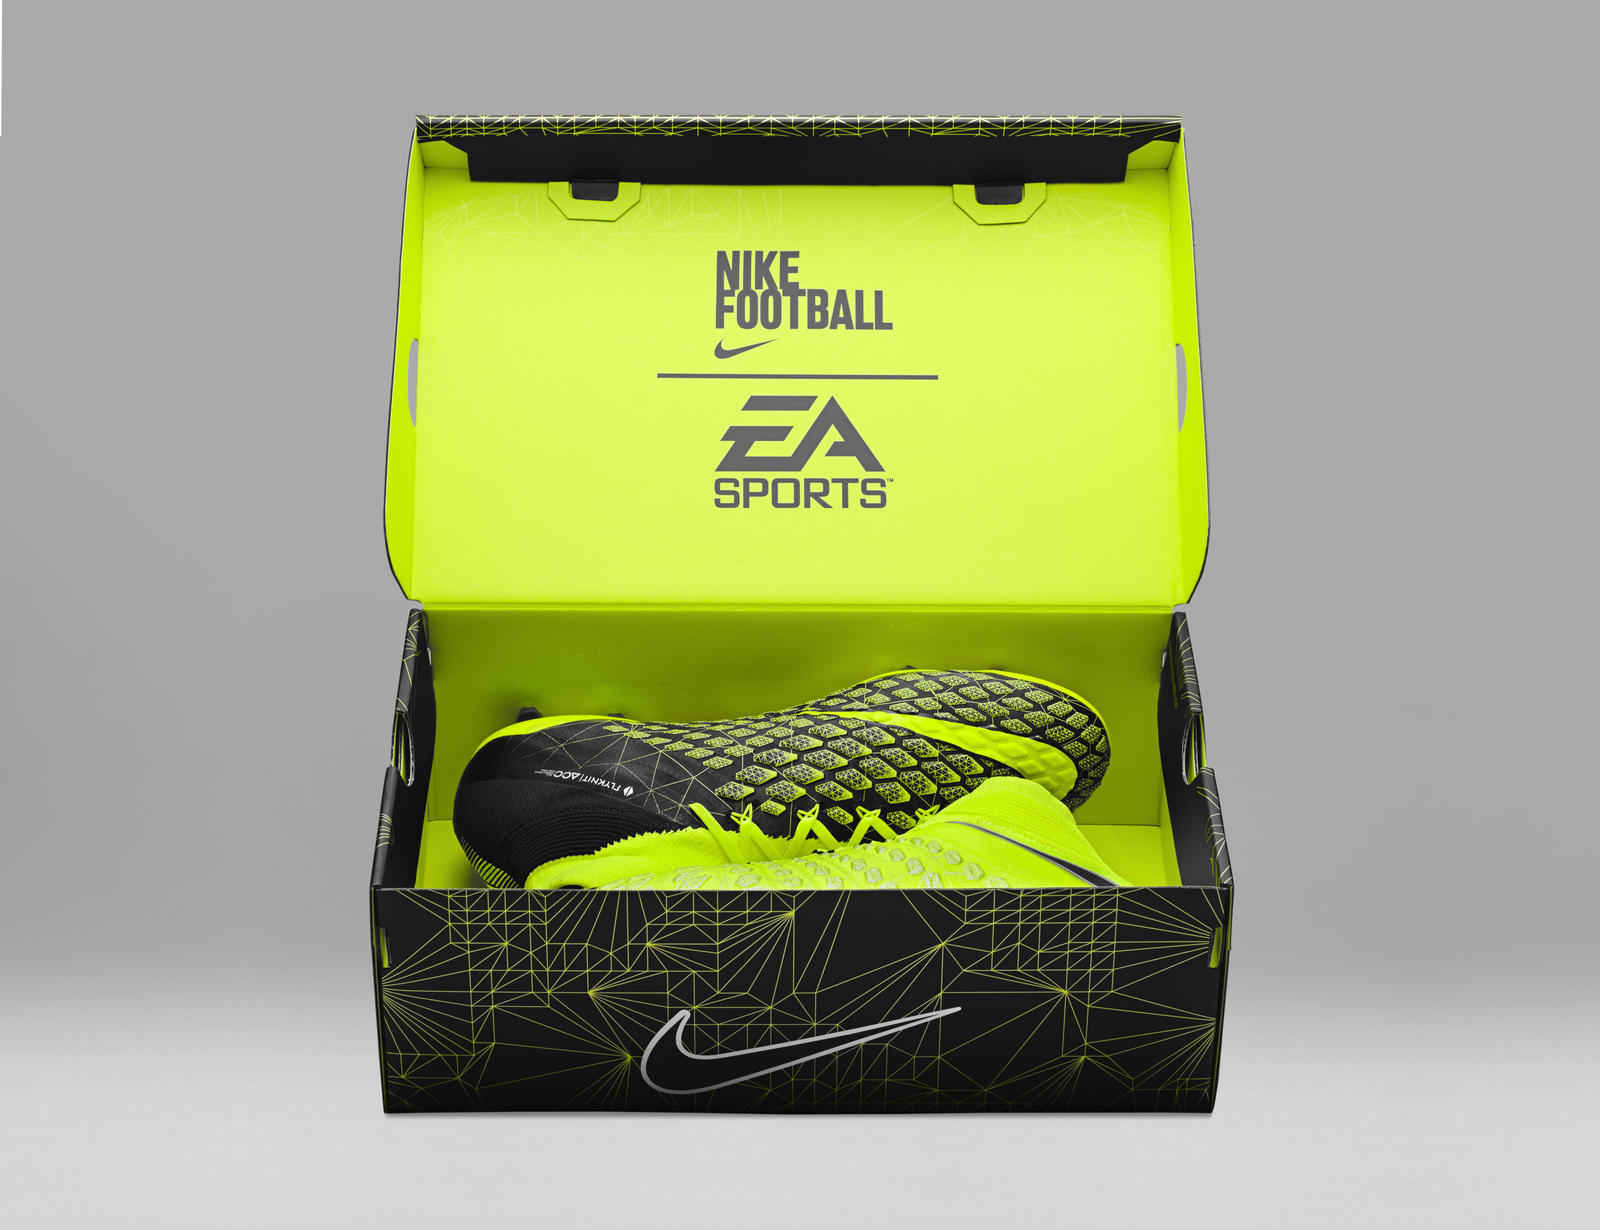 Nike X EA Sports Hypervenom 3 to Make 